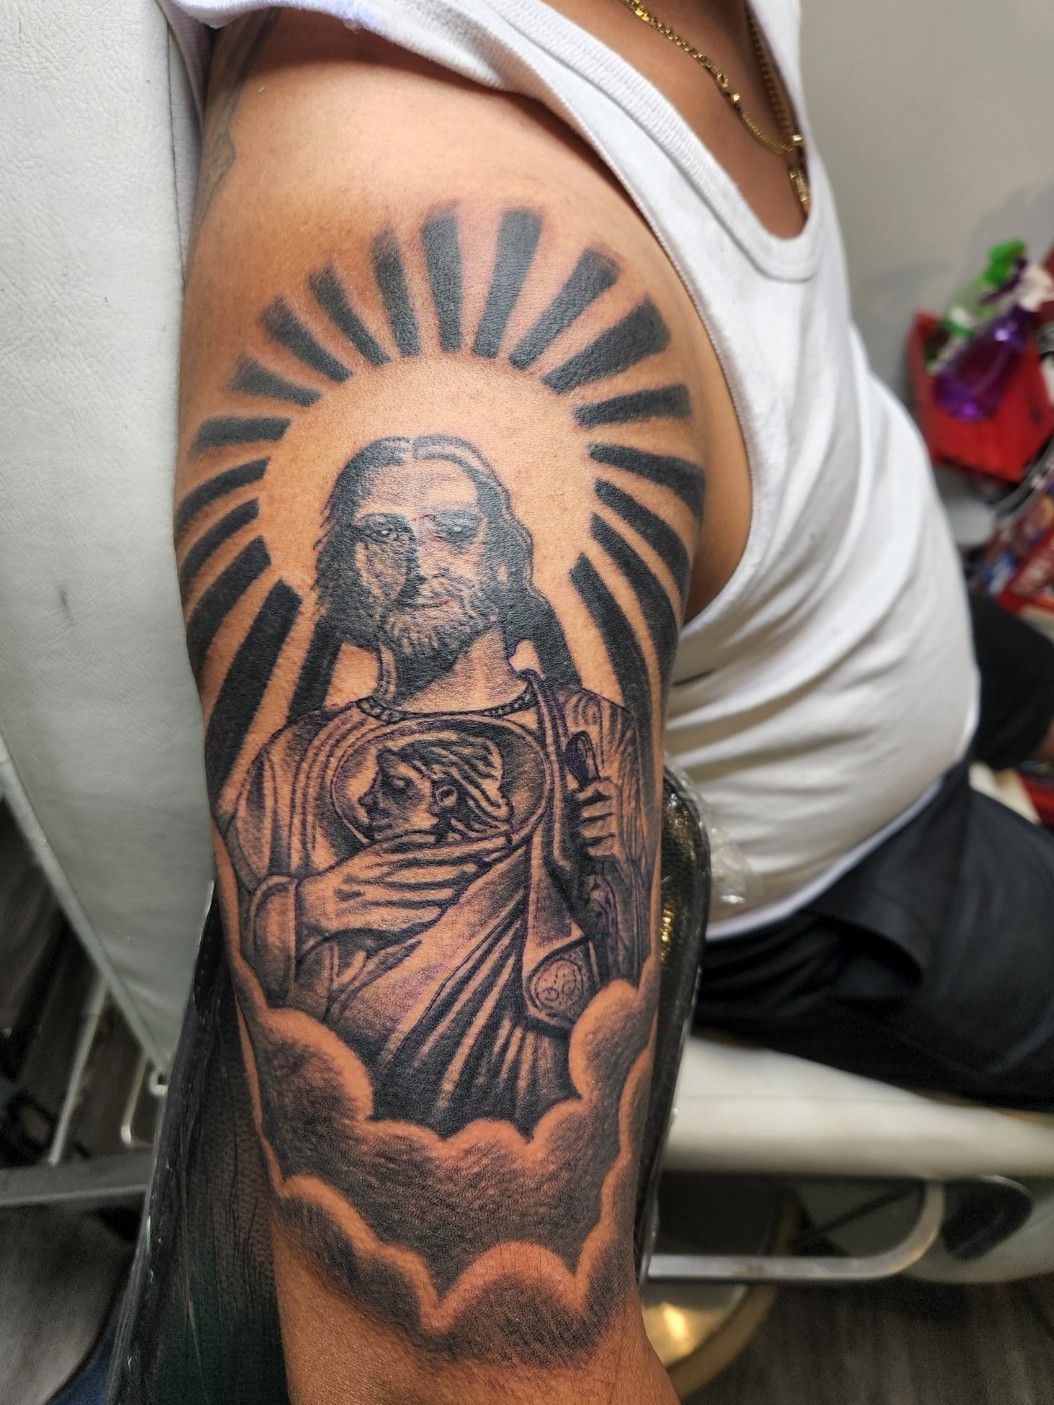 Best ideas for San Judas tattoos through 20 images